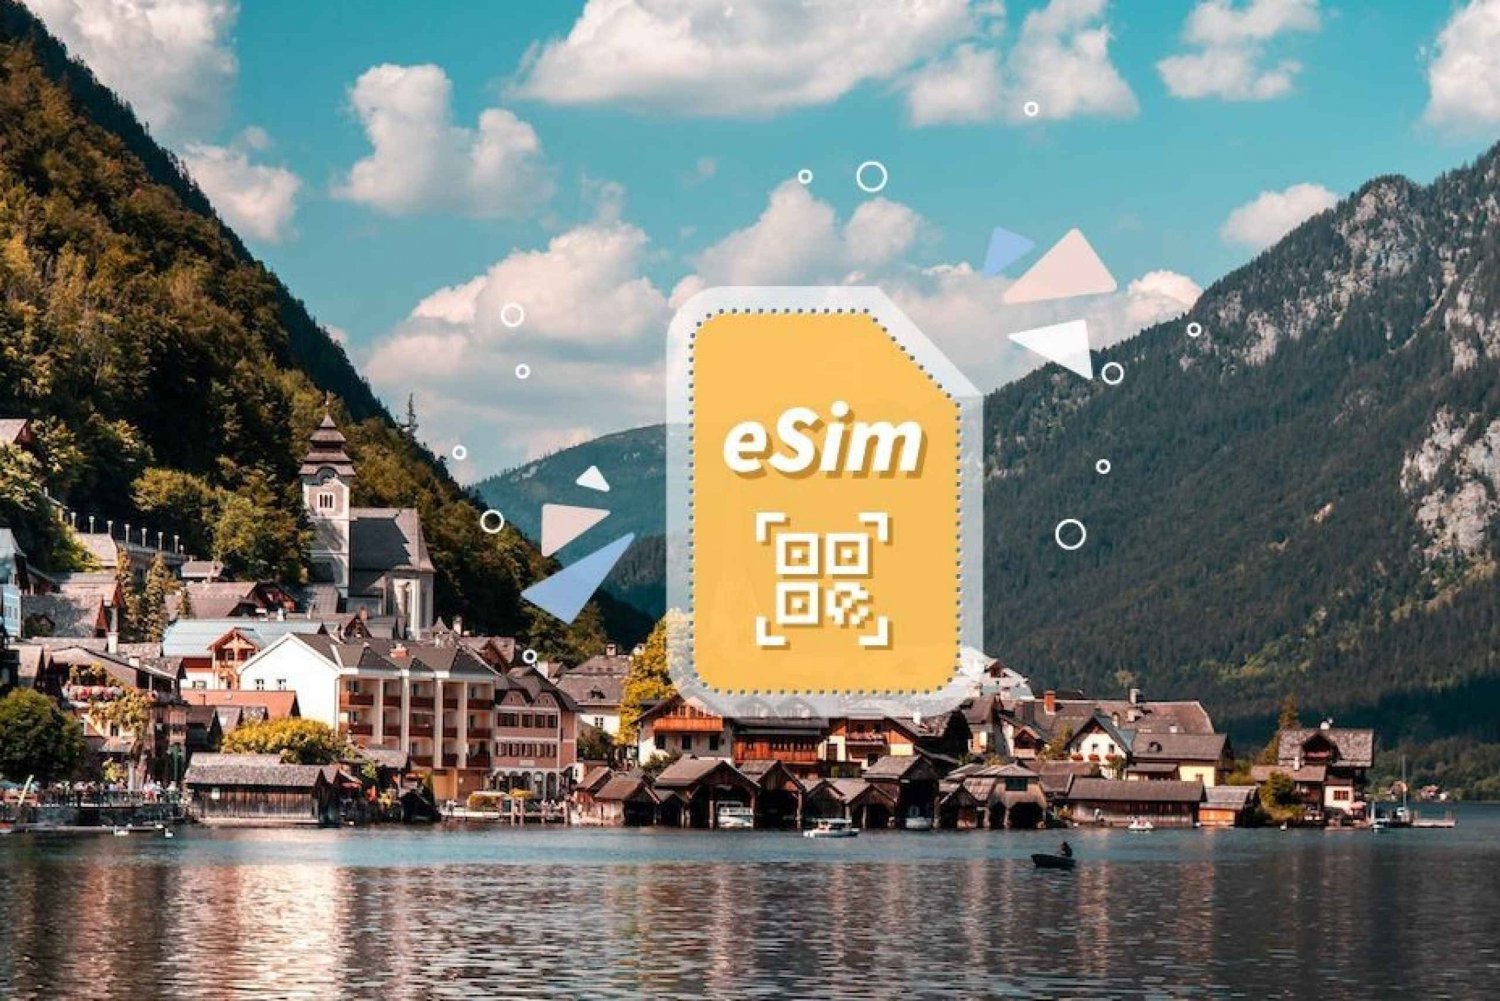 Austria/Europe: eSim Mobile Data Plan